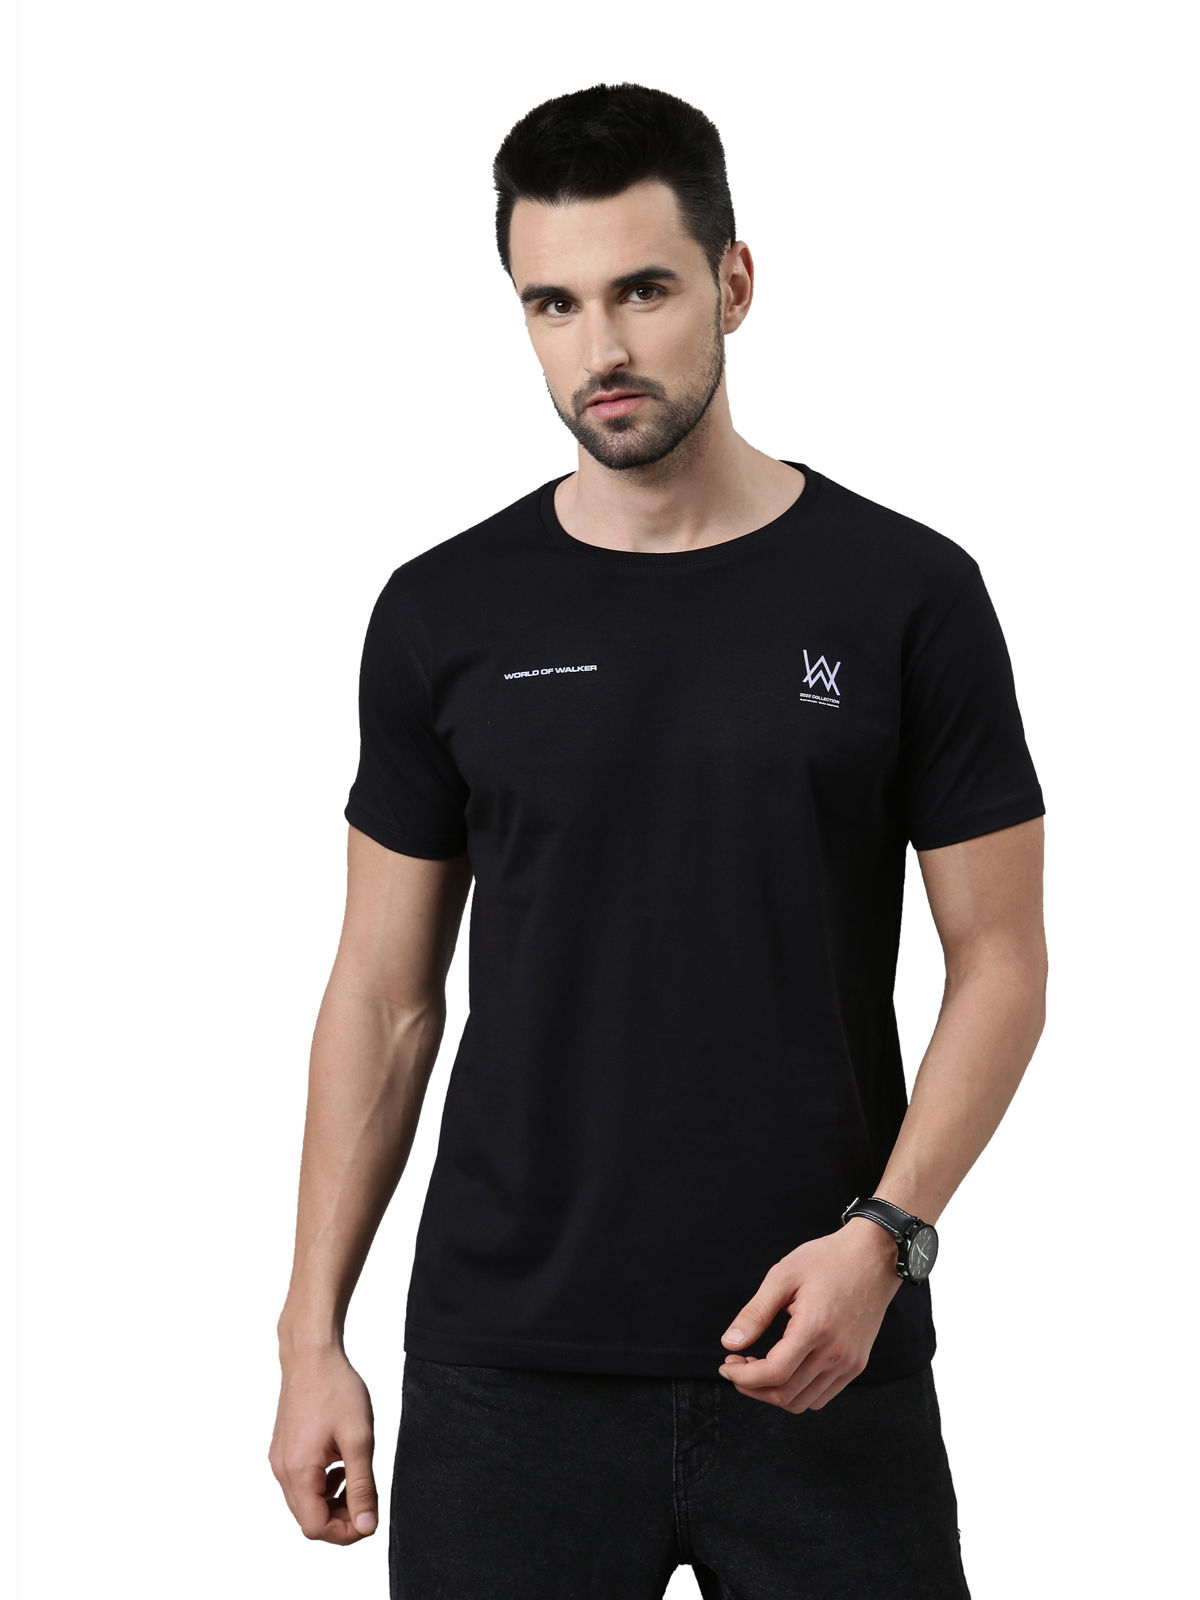 Buy Alan Walker Melting Rose Black - Male T-Shirts T-Shirts Online